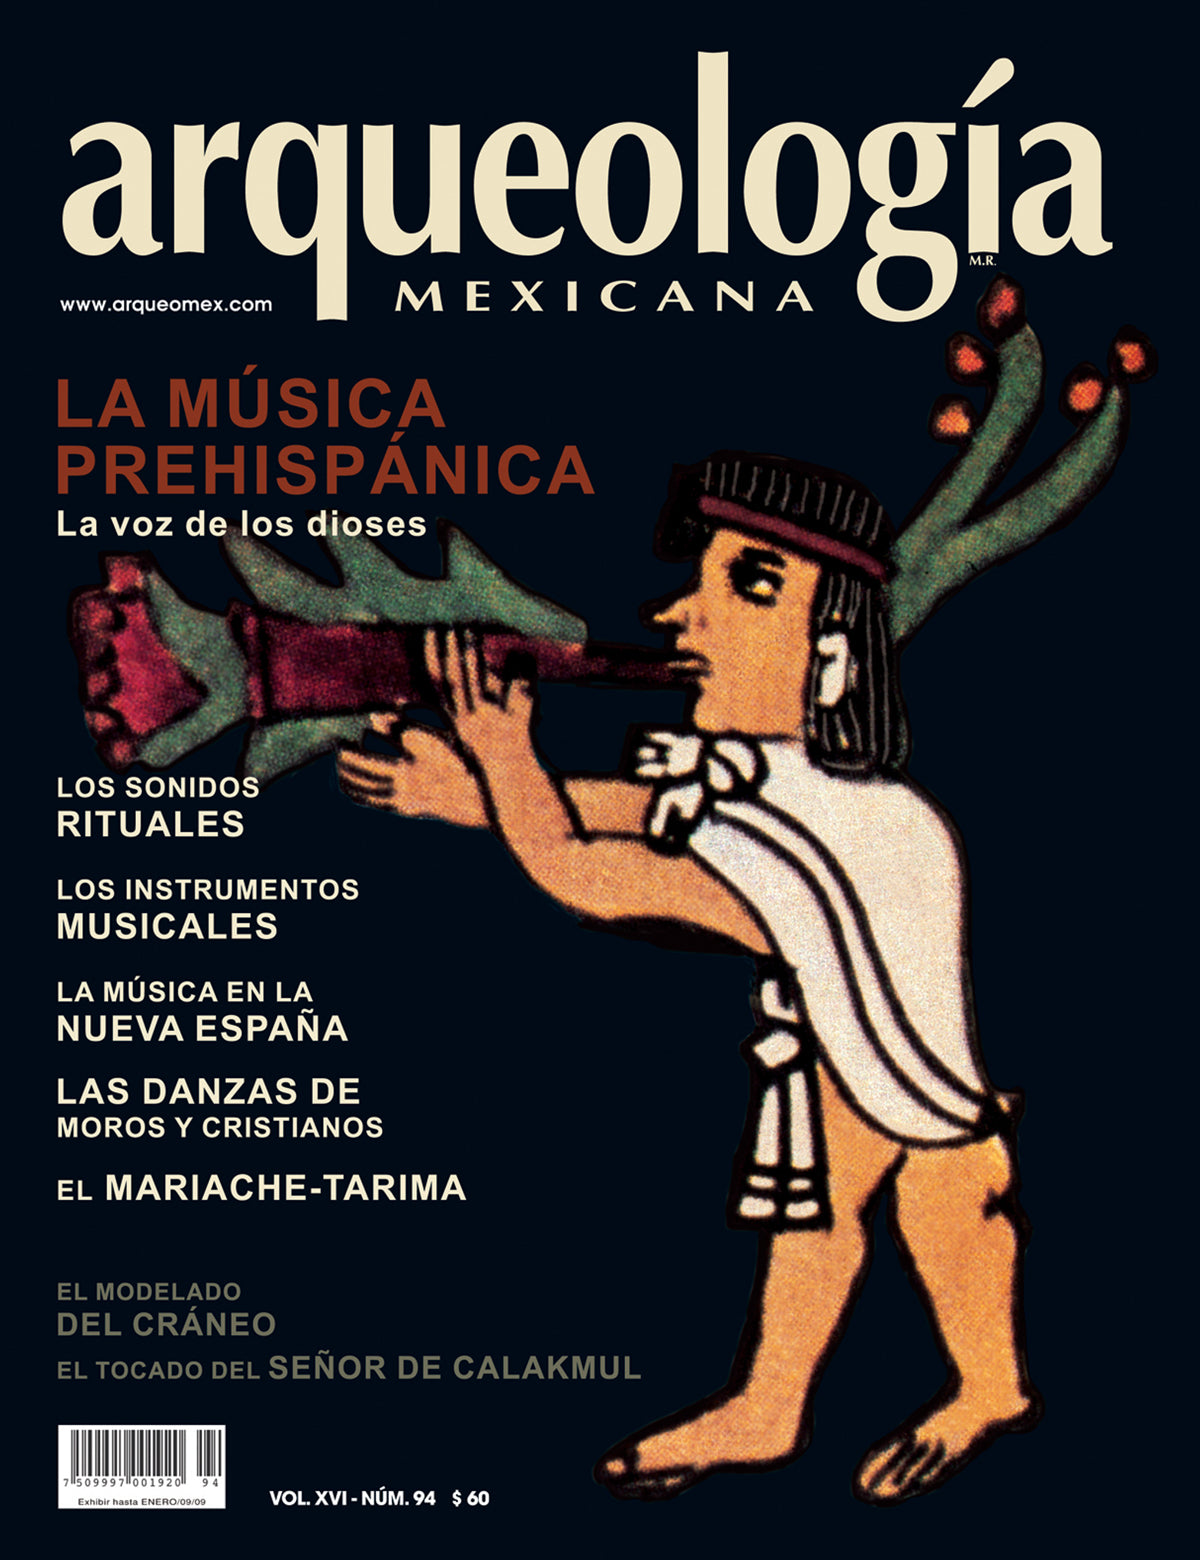 La música prehispánica